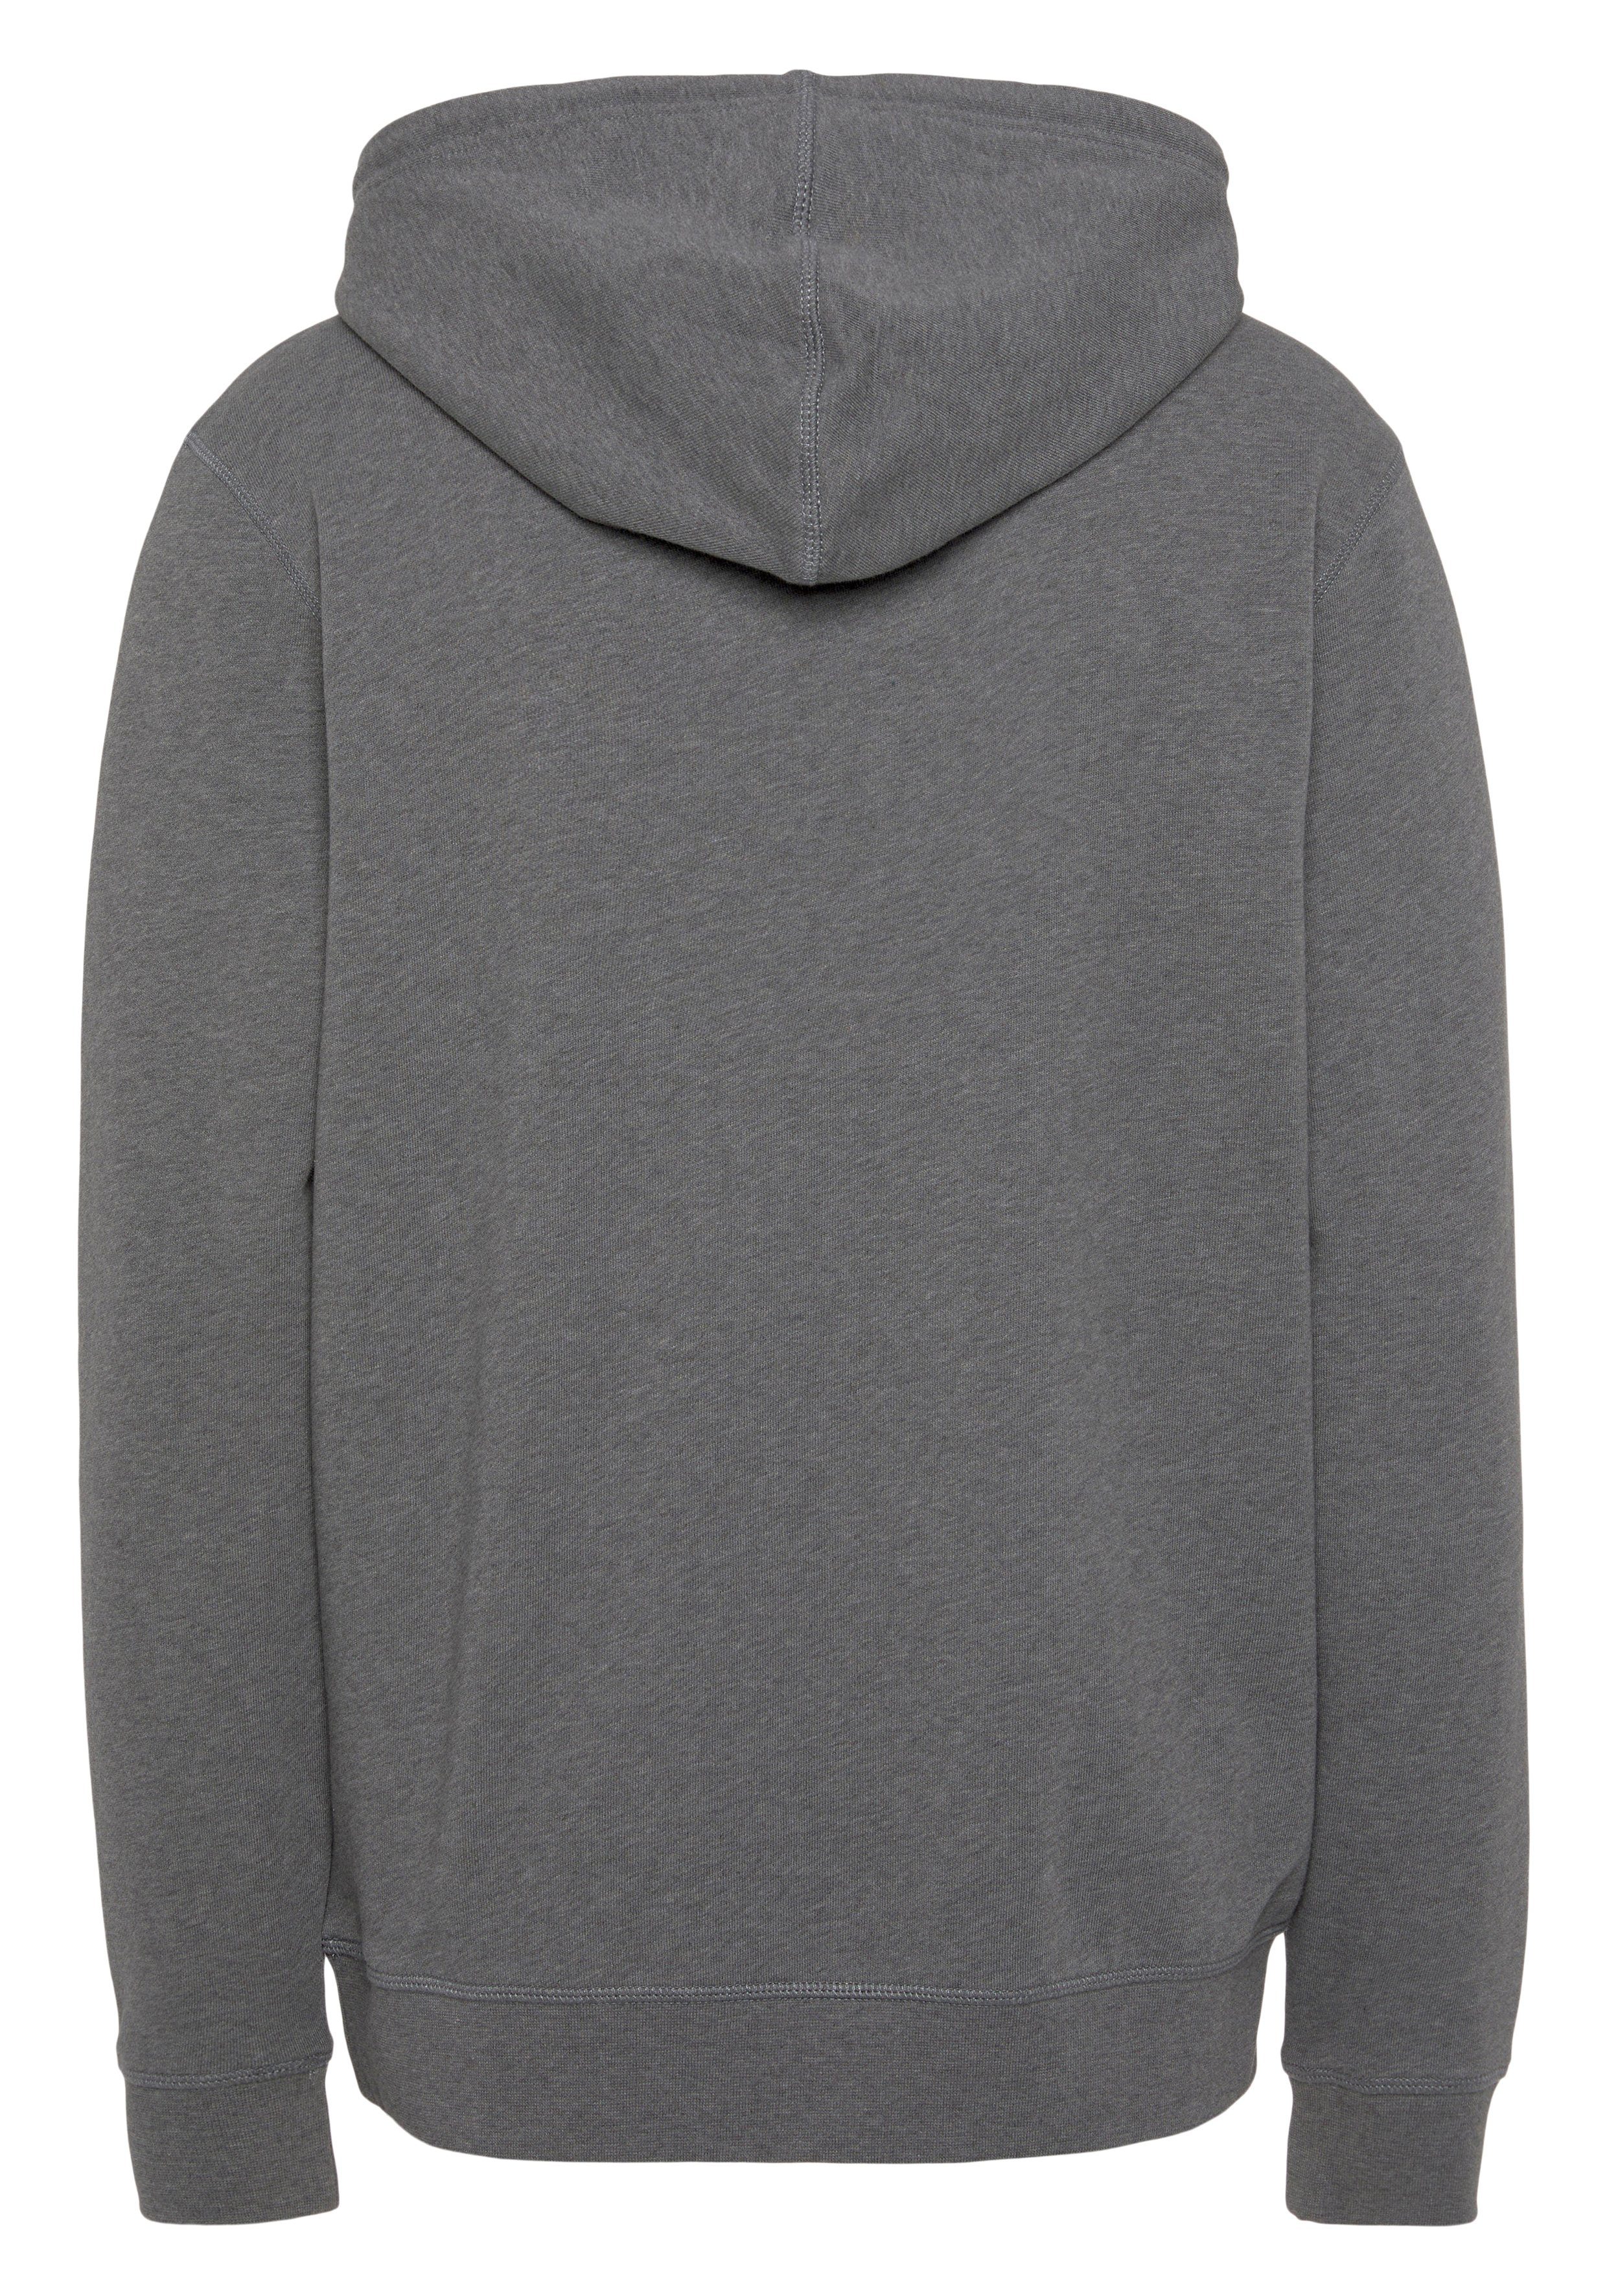 Wetalk Kordel ORANGE BOSS Sweatshirt mit Light/Pastel_Grey_051